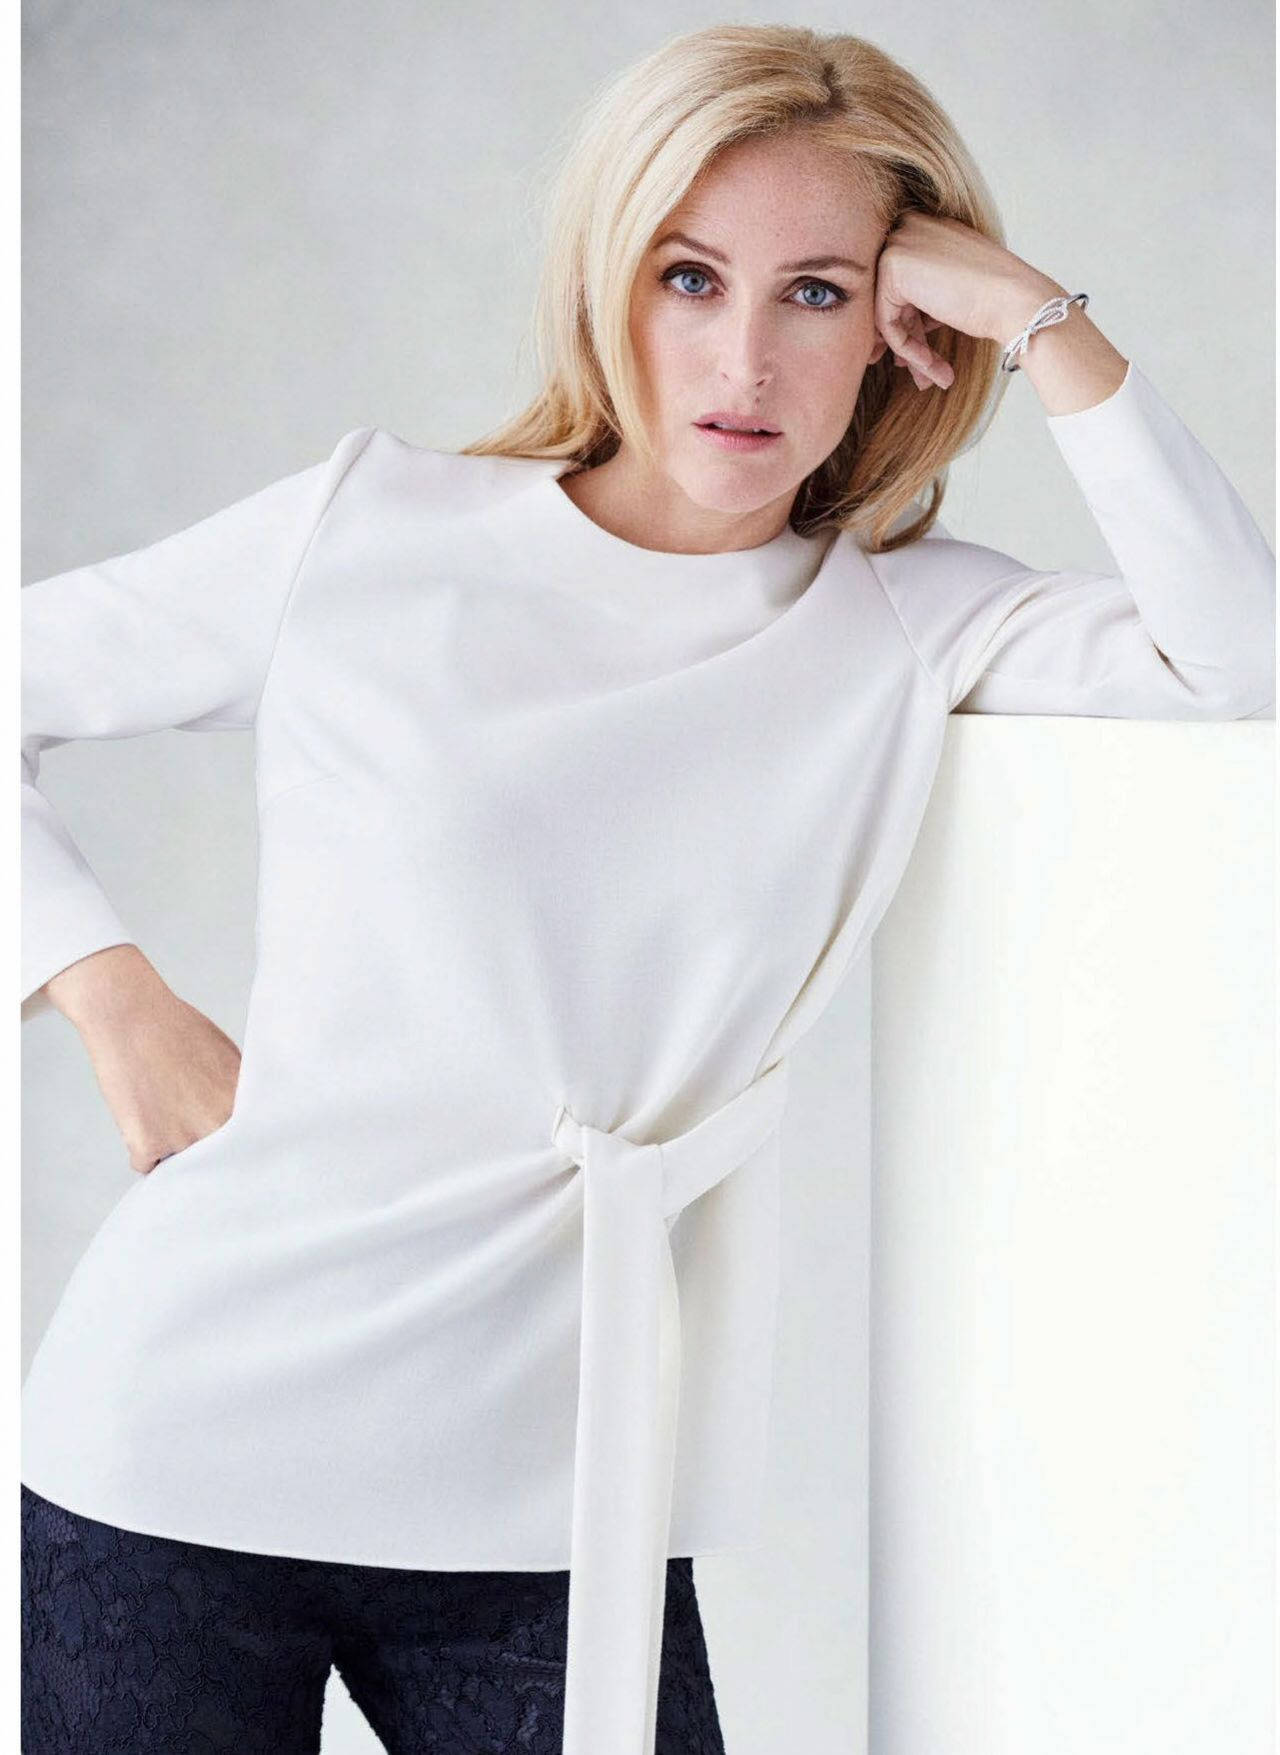 Elegant Gillian Anderson In Harper's Bazaar Magazine Background